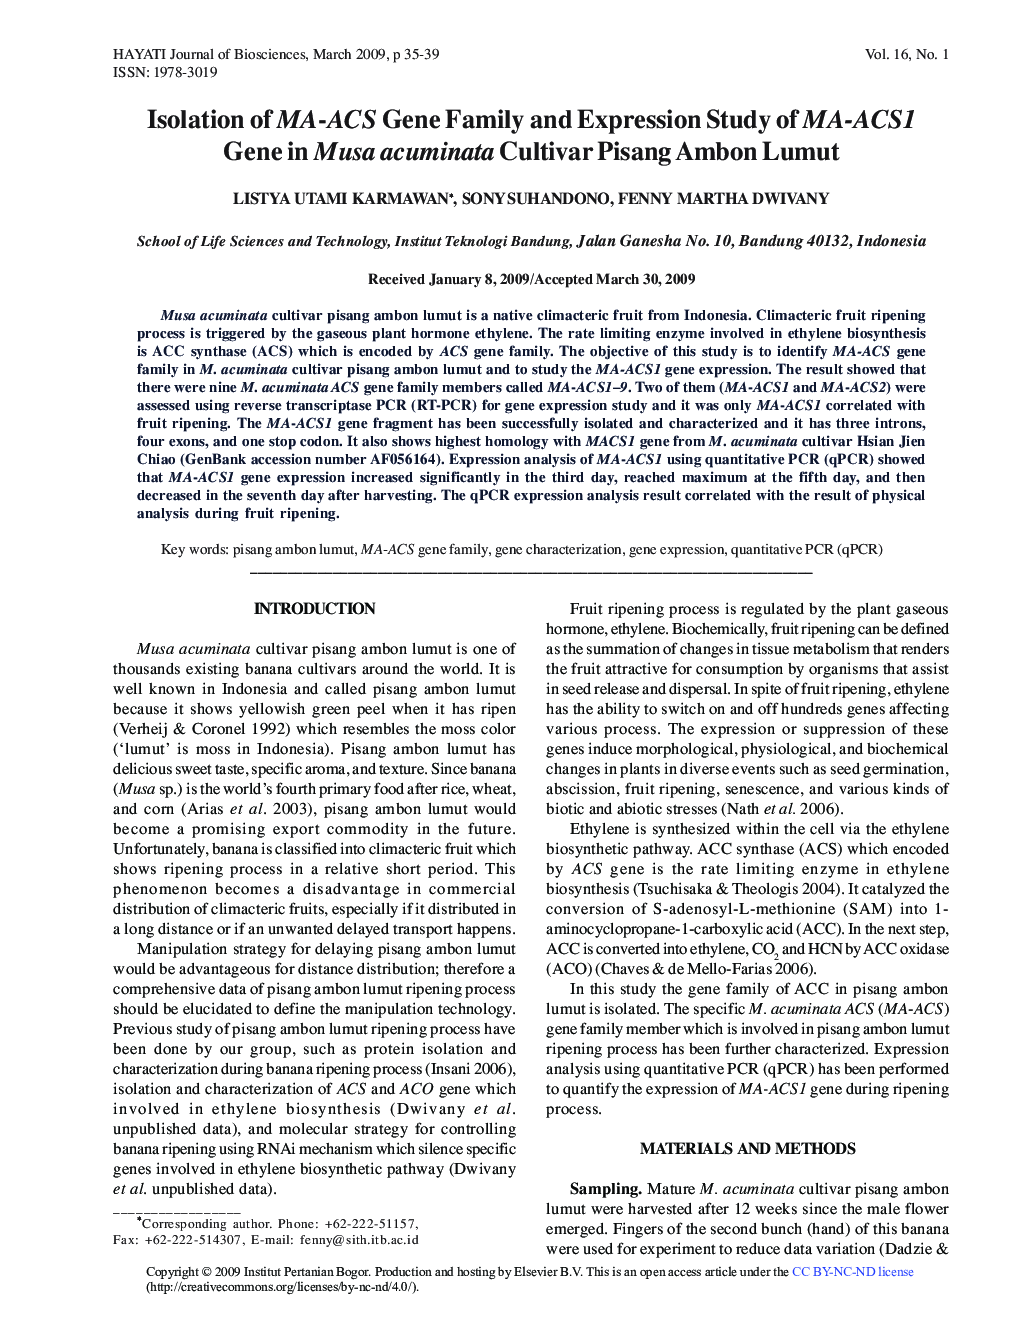 Isolation of MA-ACS Gene Family and Expression Study of MA-ACS1 Gene in Musa acuminata Cultivar Pisang Ambon Lumut